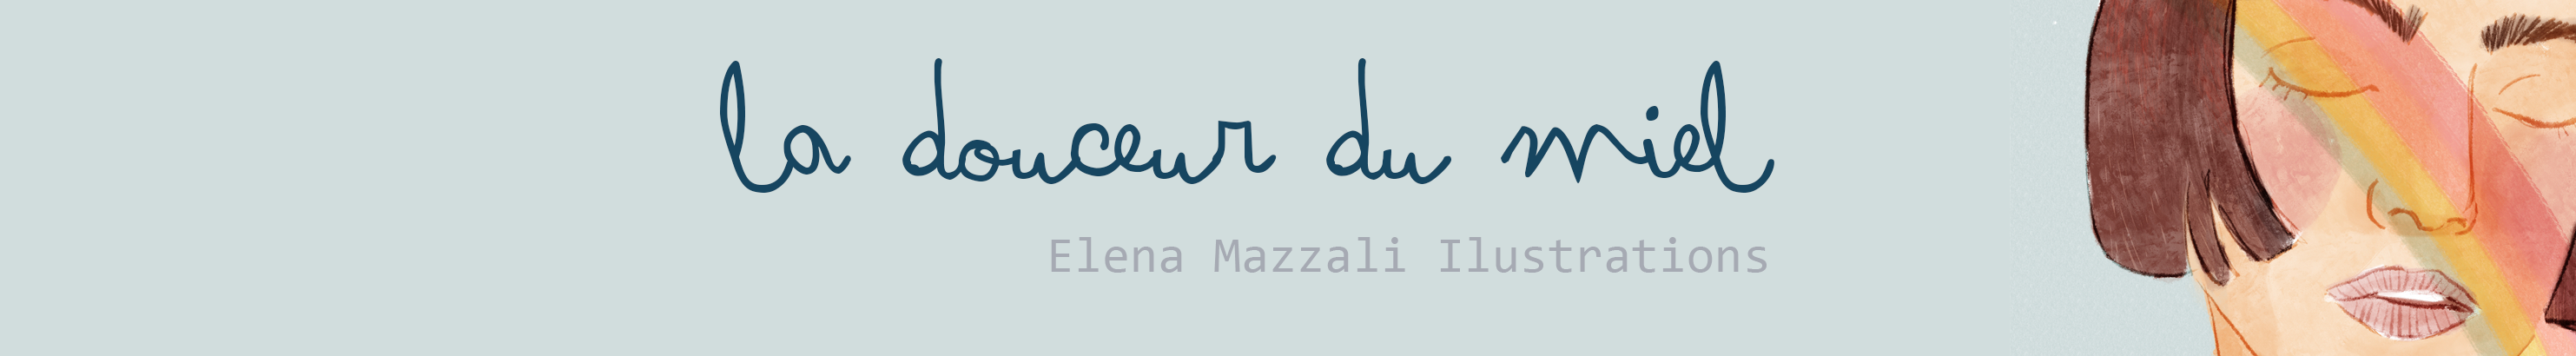 Elena Mazzalis profilbanner